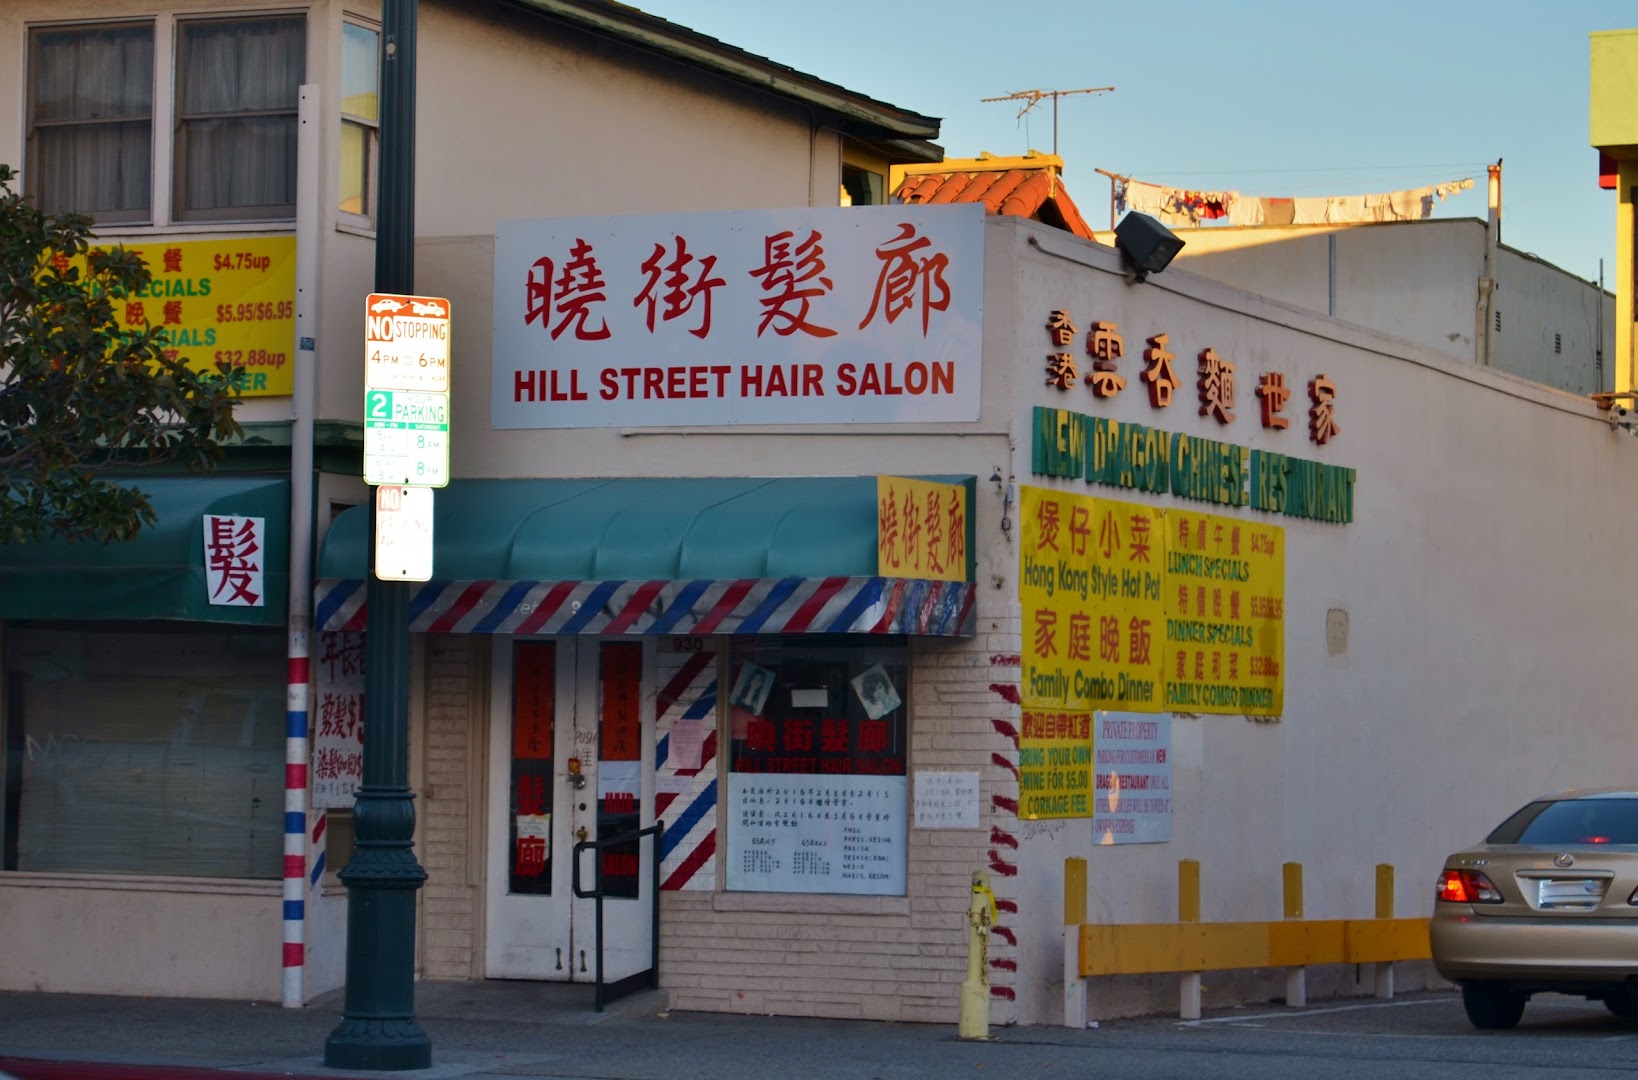 Hill Street Hair Salon